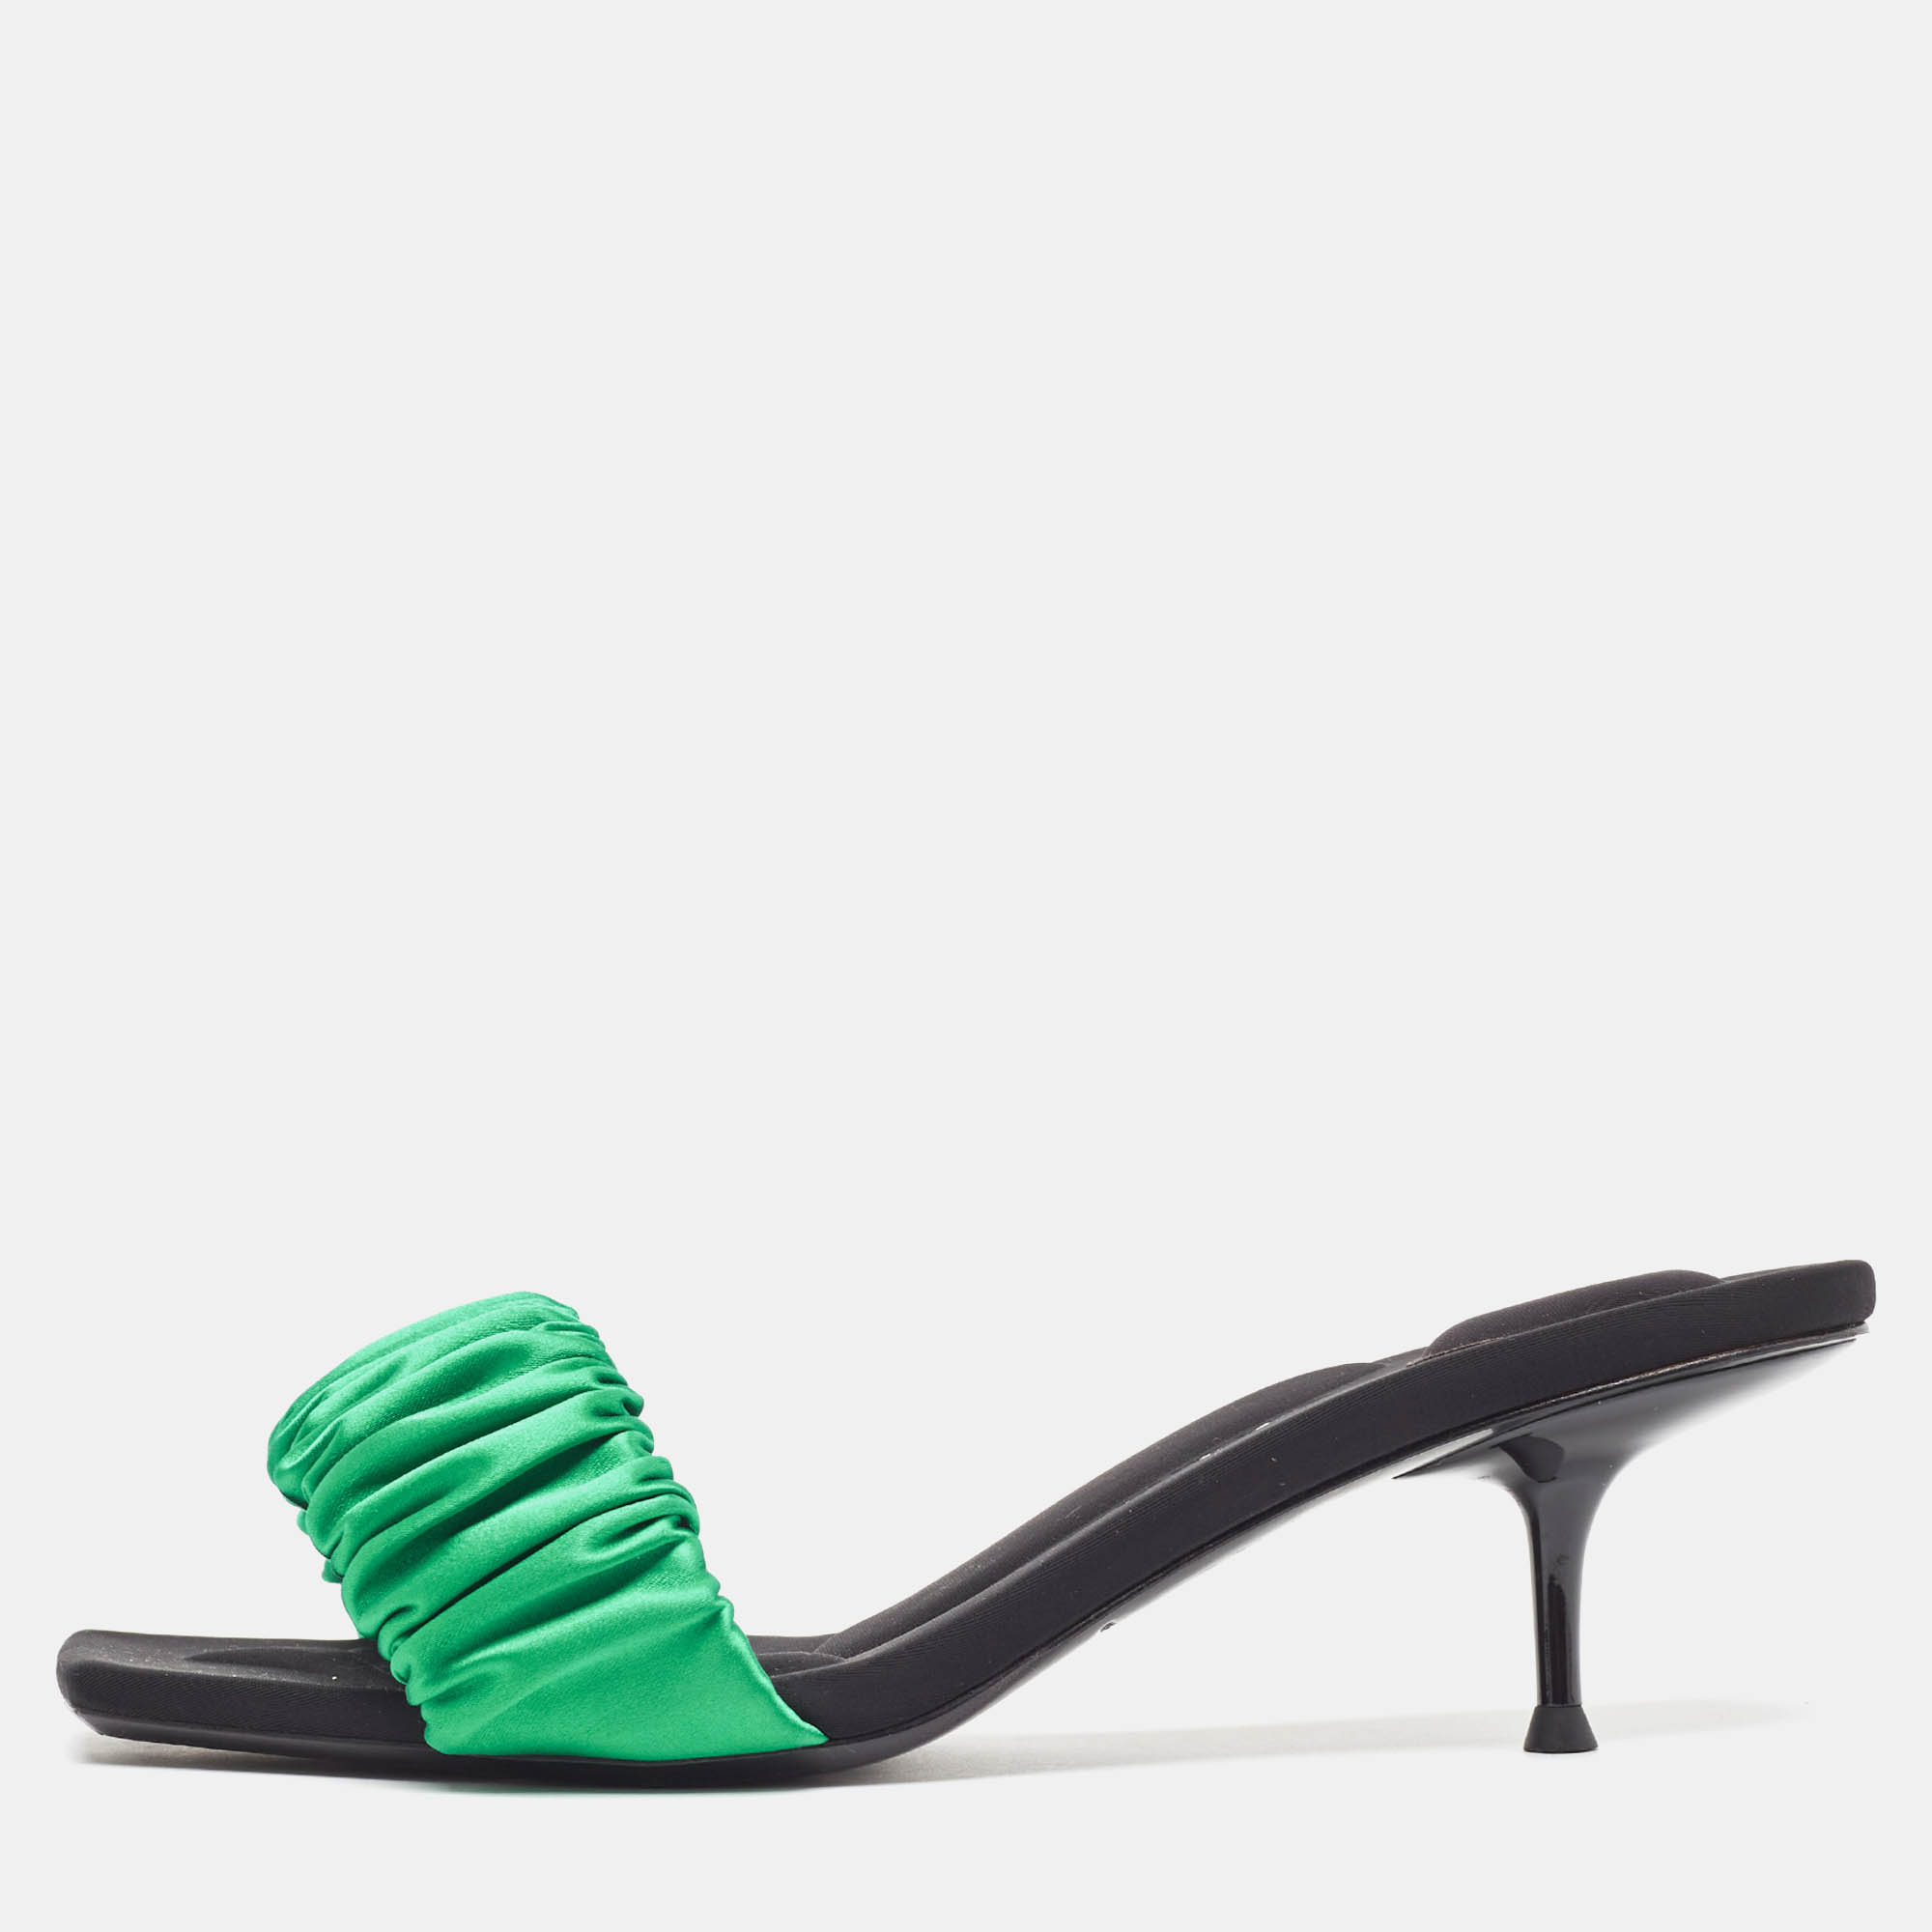 Alexander wang green pleated satin slide sandals size 39